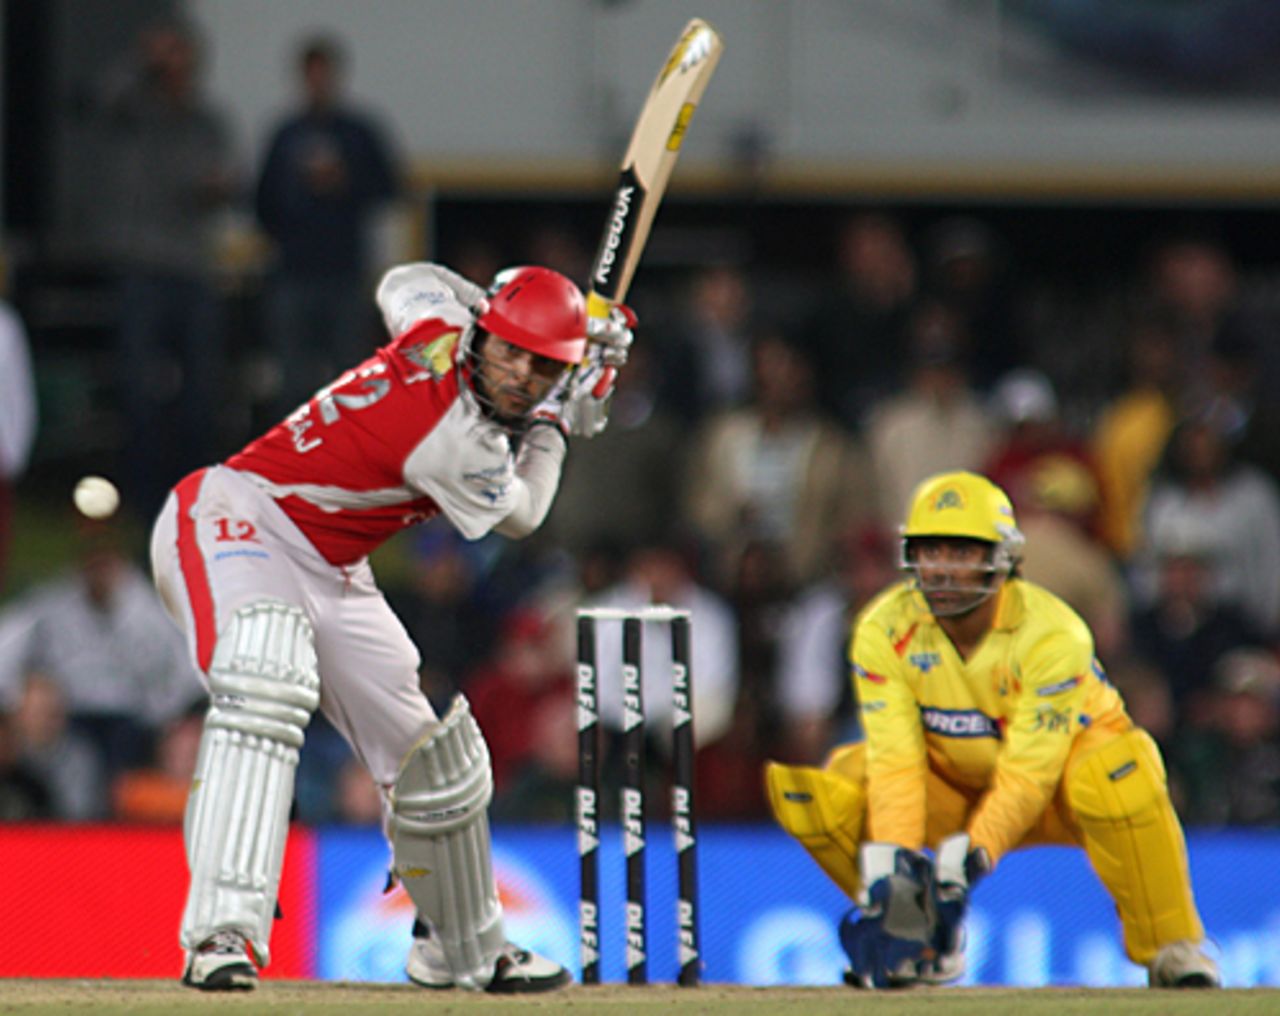 Yuvraj Singh reached his fifty off 28 balls, Chennai Super Kings v Kings XI Punjab, IPL, 34th match, Centurion, May 7, 2009